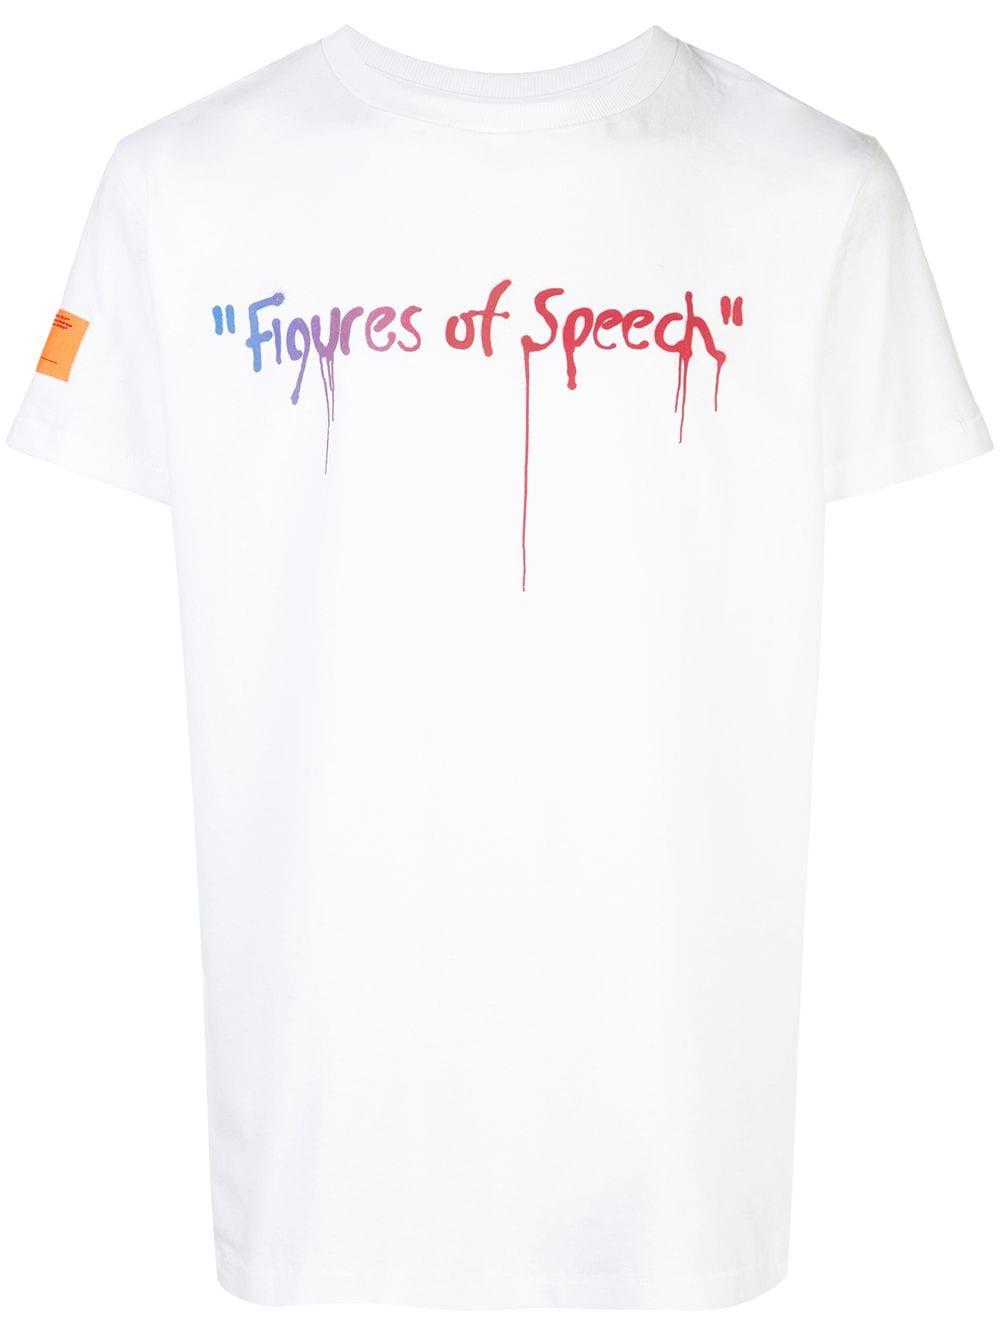 Virgil Abloh's Figures of Speech T-Shirt Capsule: See More Here